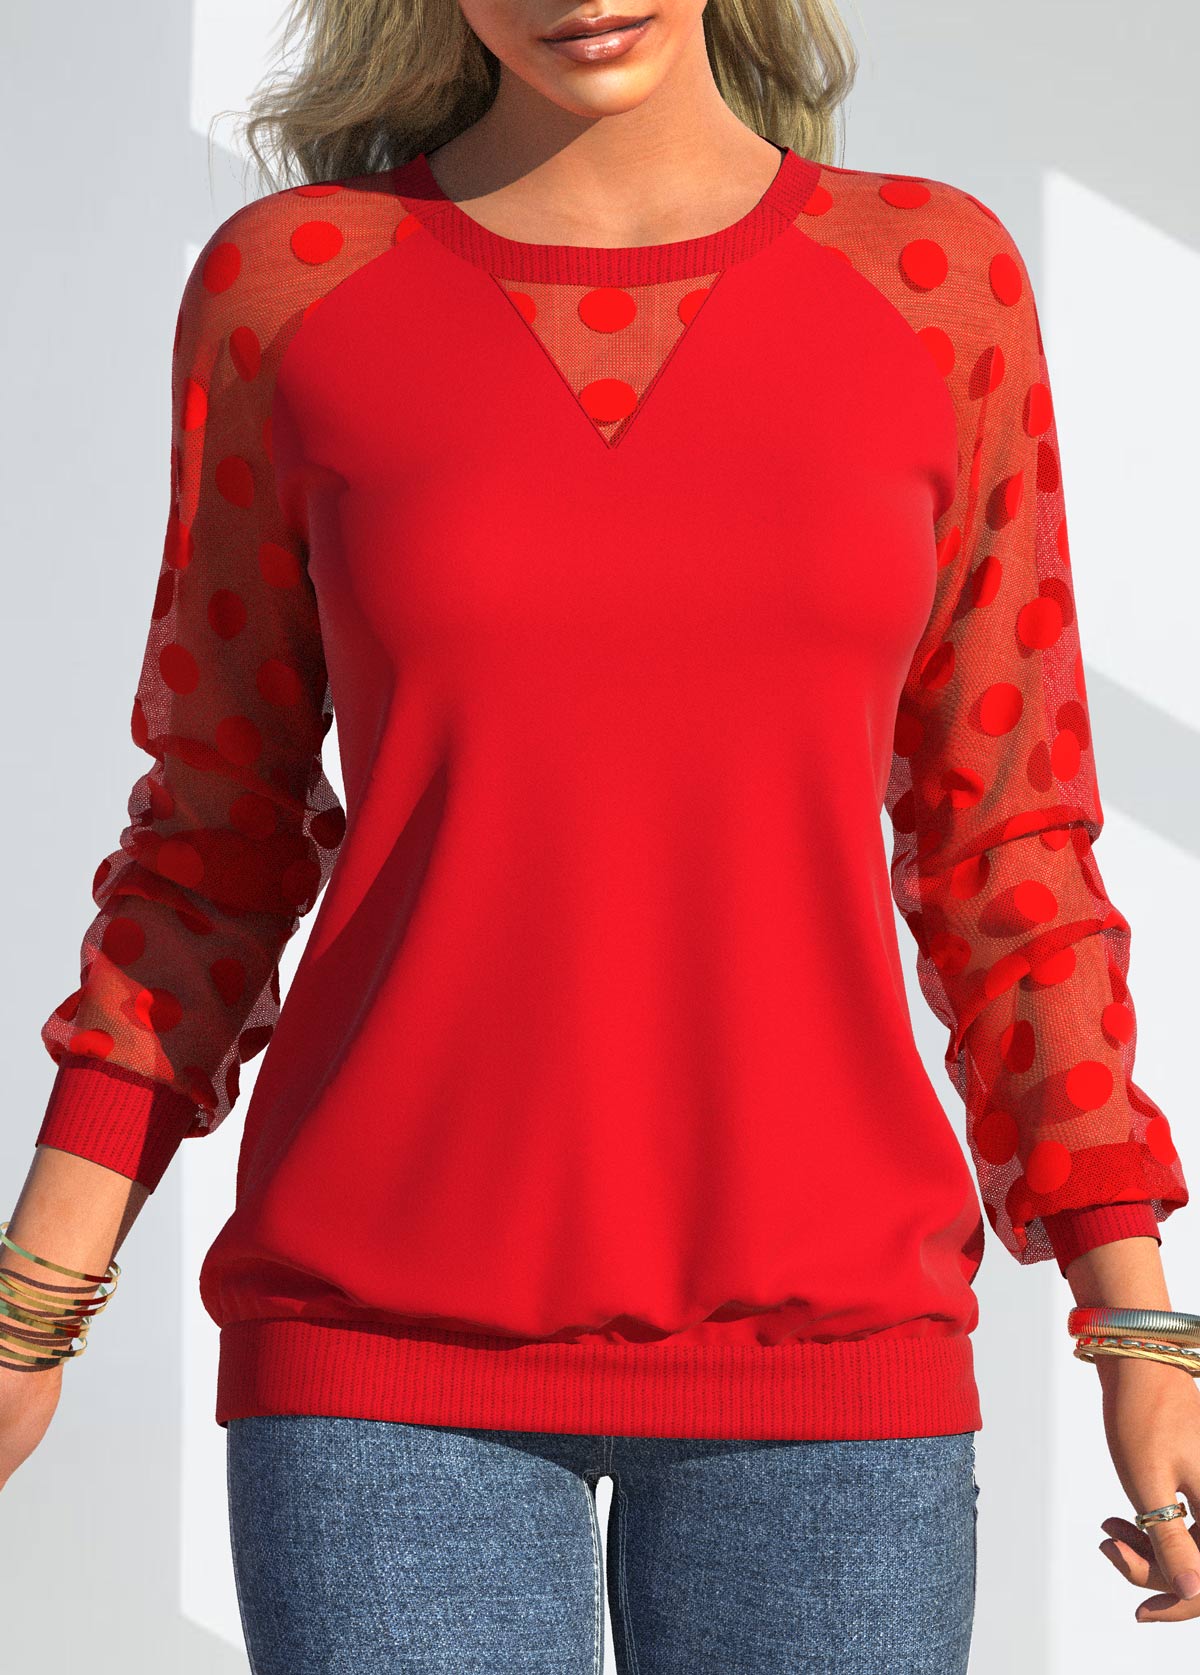 Valentines Lace Stitching Polka Dot Red Sweatshirt